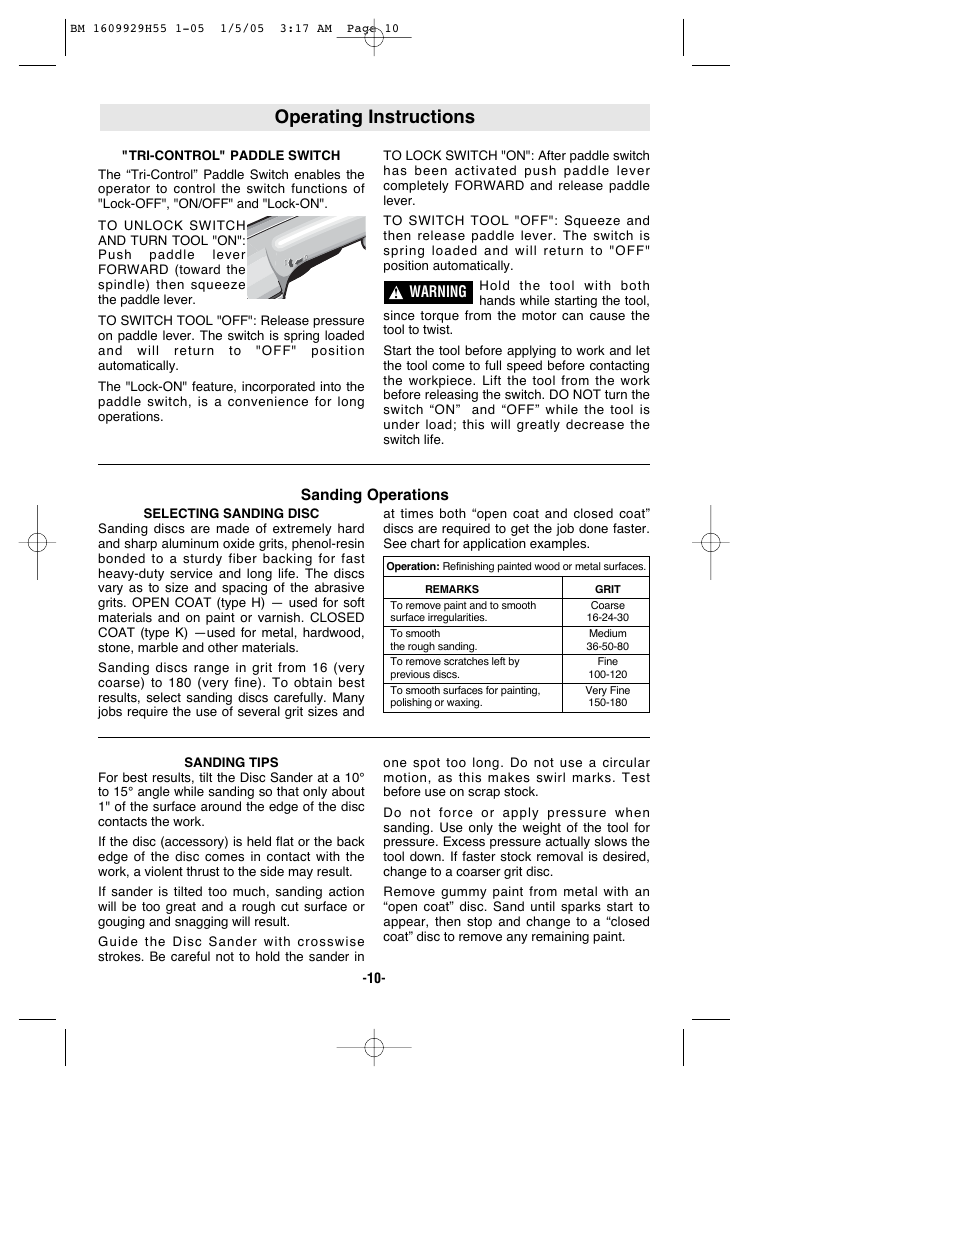 Operating instructions | Bosch classixx 1853-5 User Manual | Page 10 / 36 |  Original mode